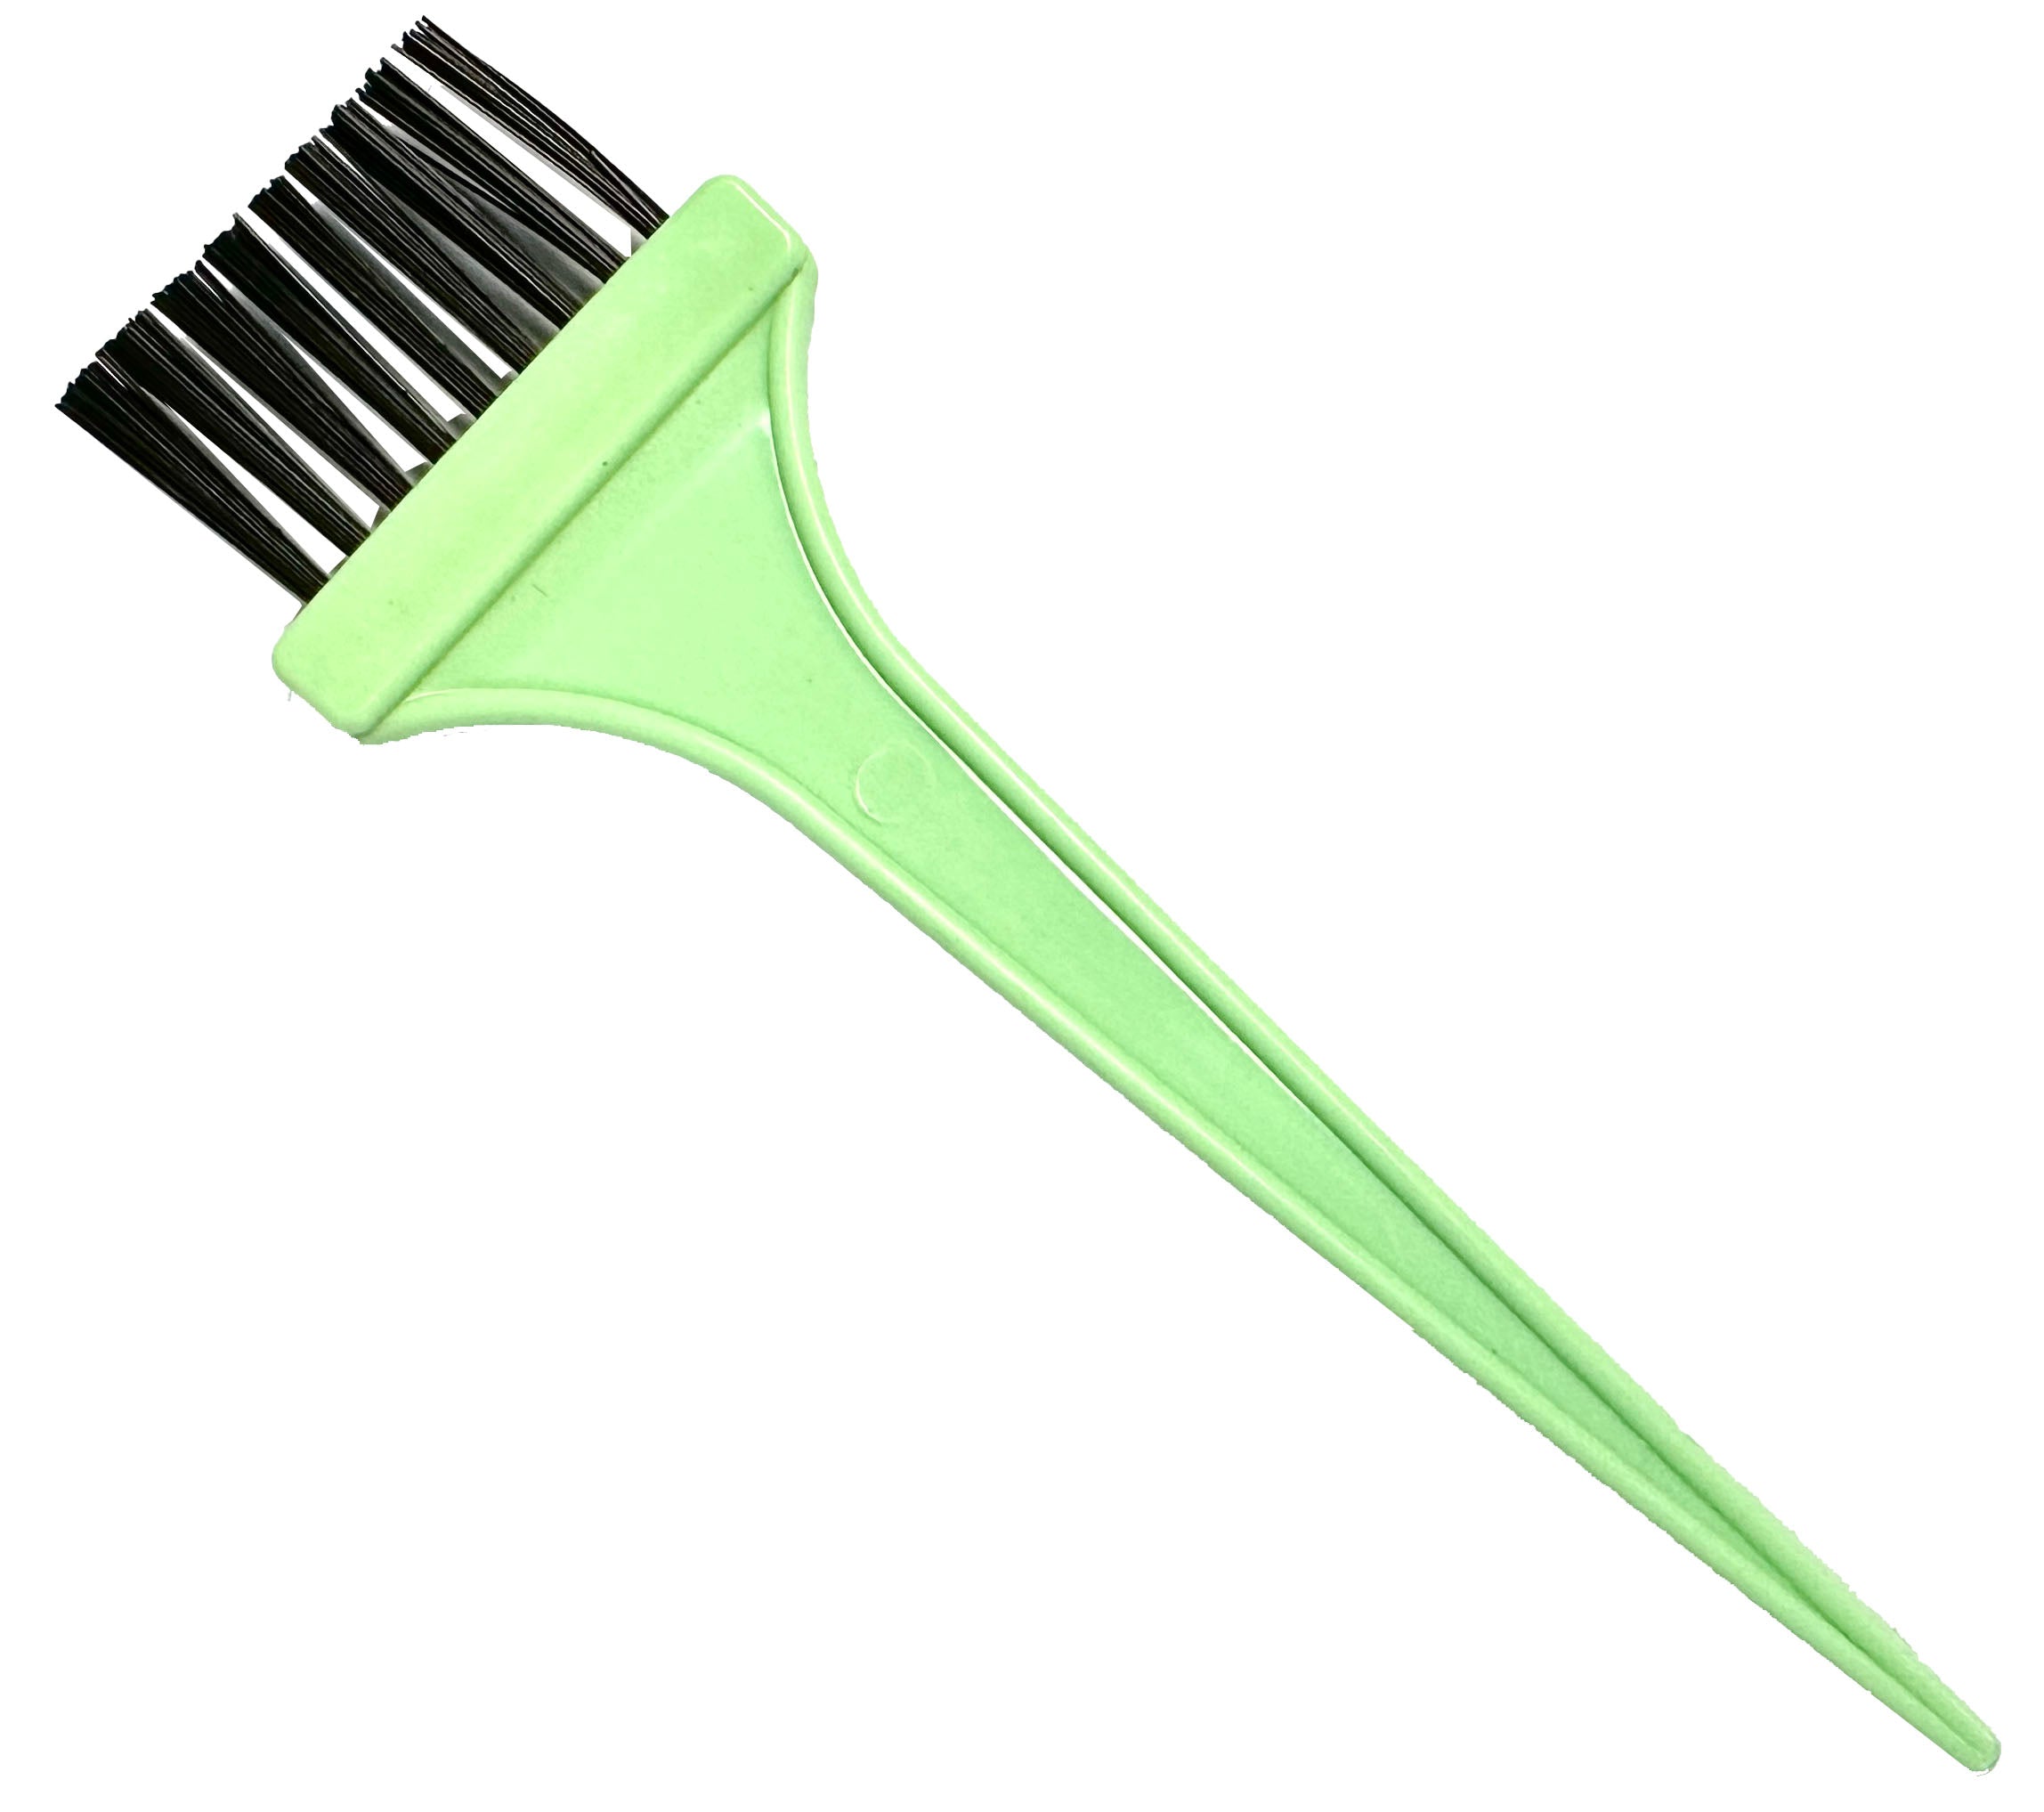 Zenia Hair Dying Brush - Great for hair coloring, tinting, henna application, indigo application